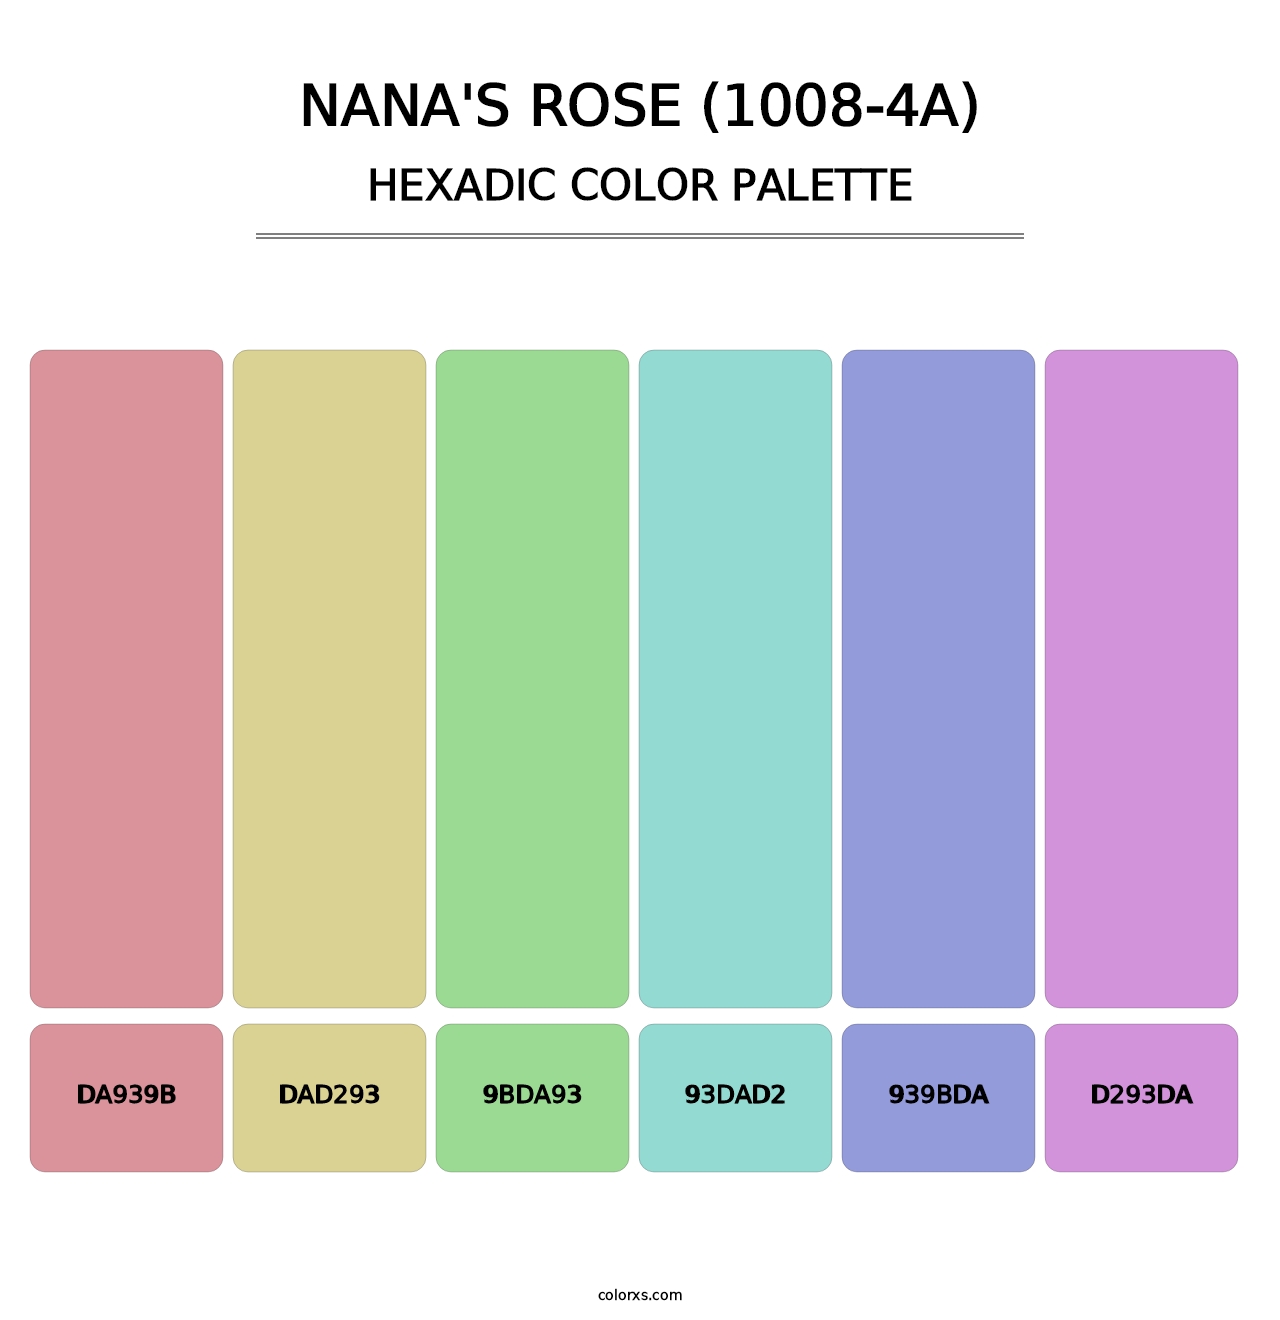 Nana's Rose (1008-4A) - Hexadic Color Palette